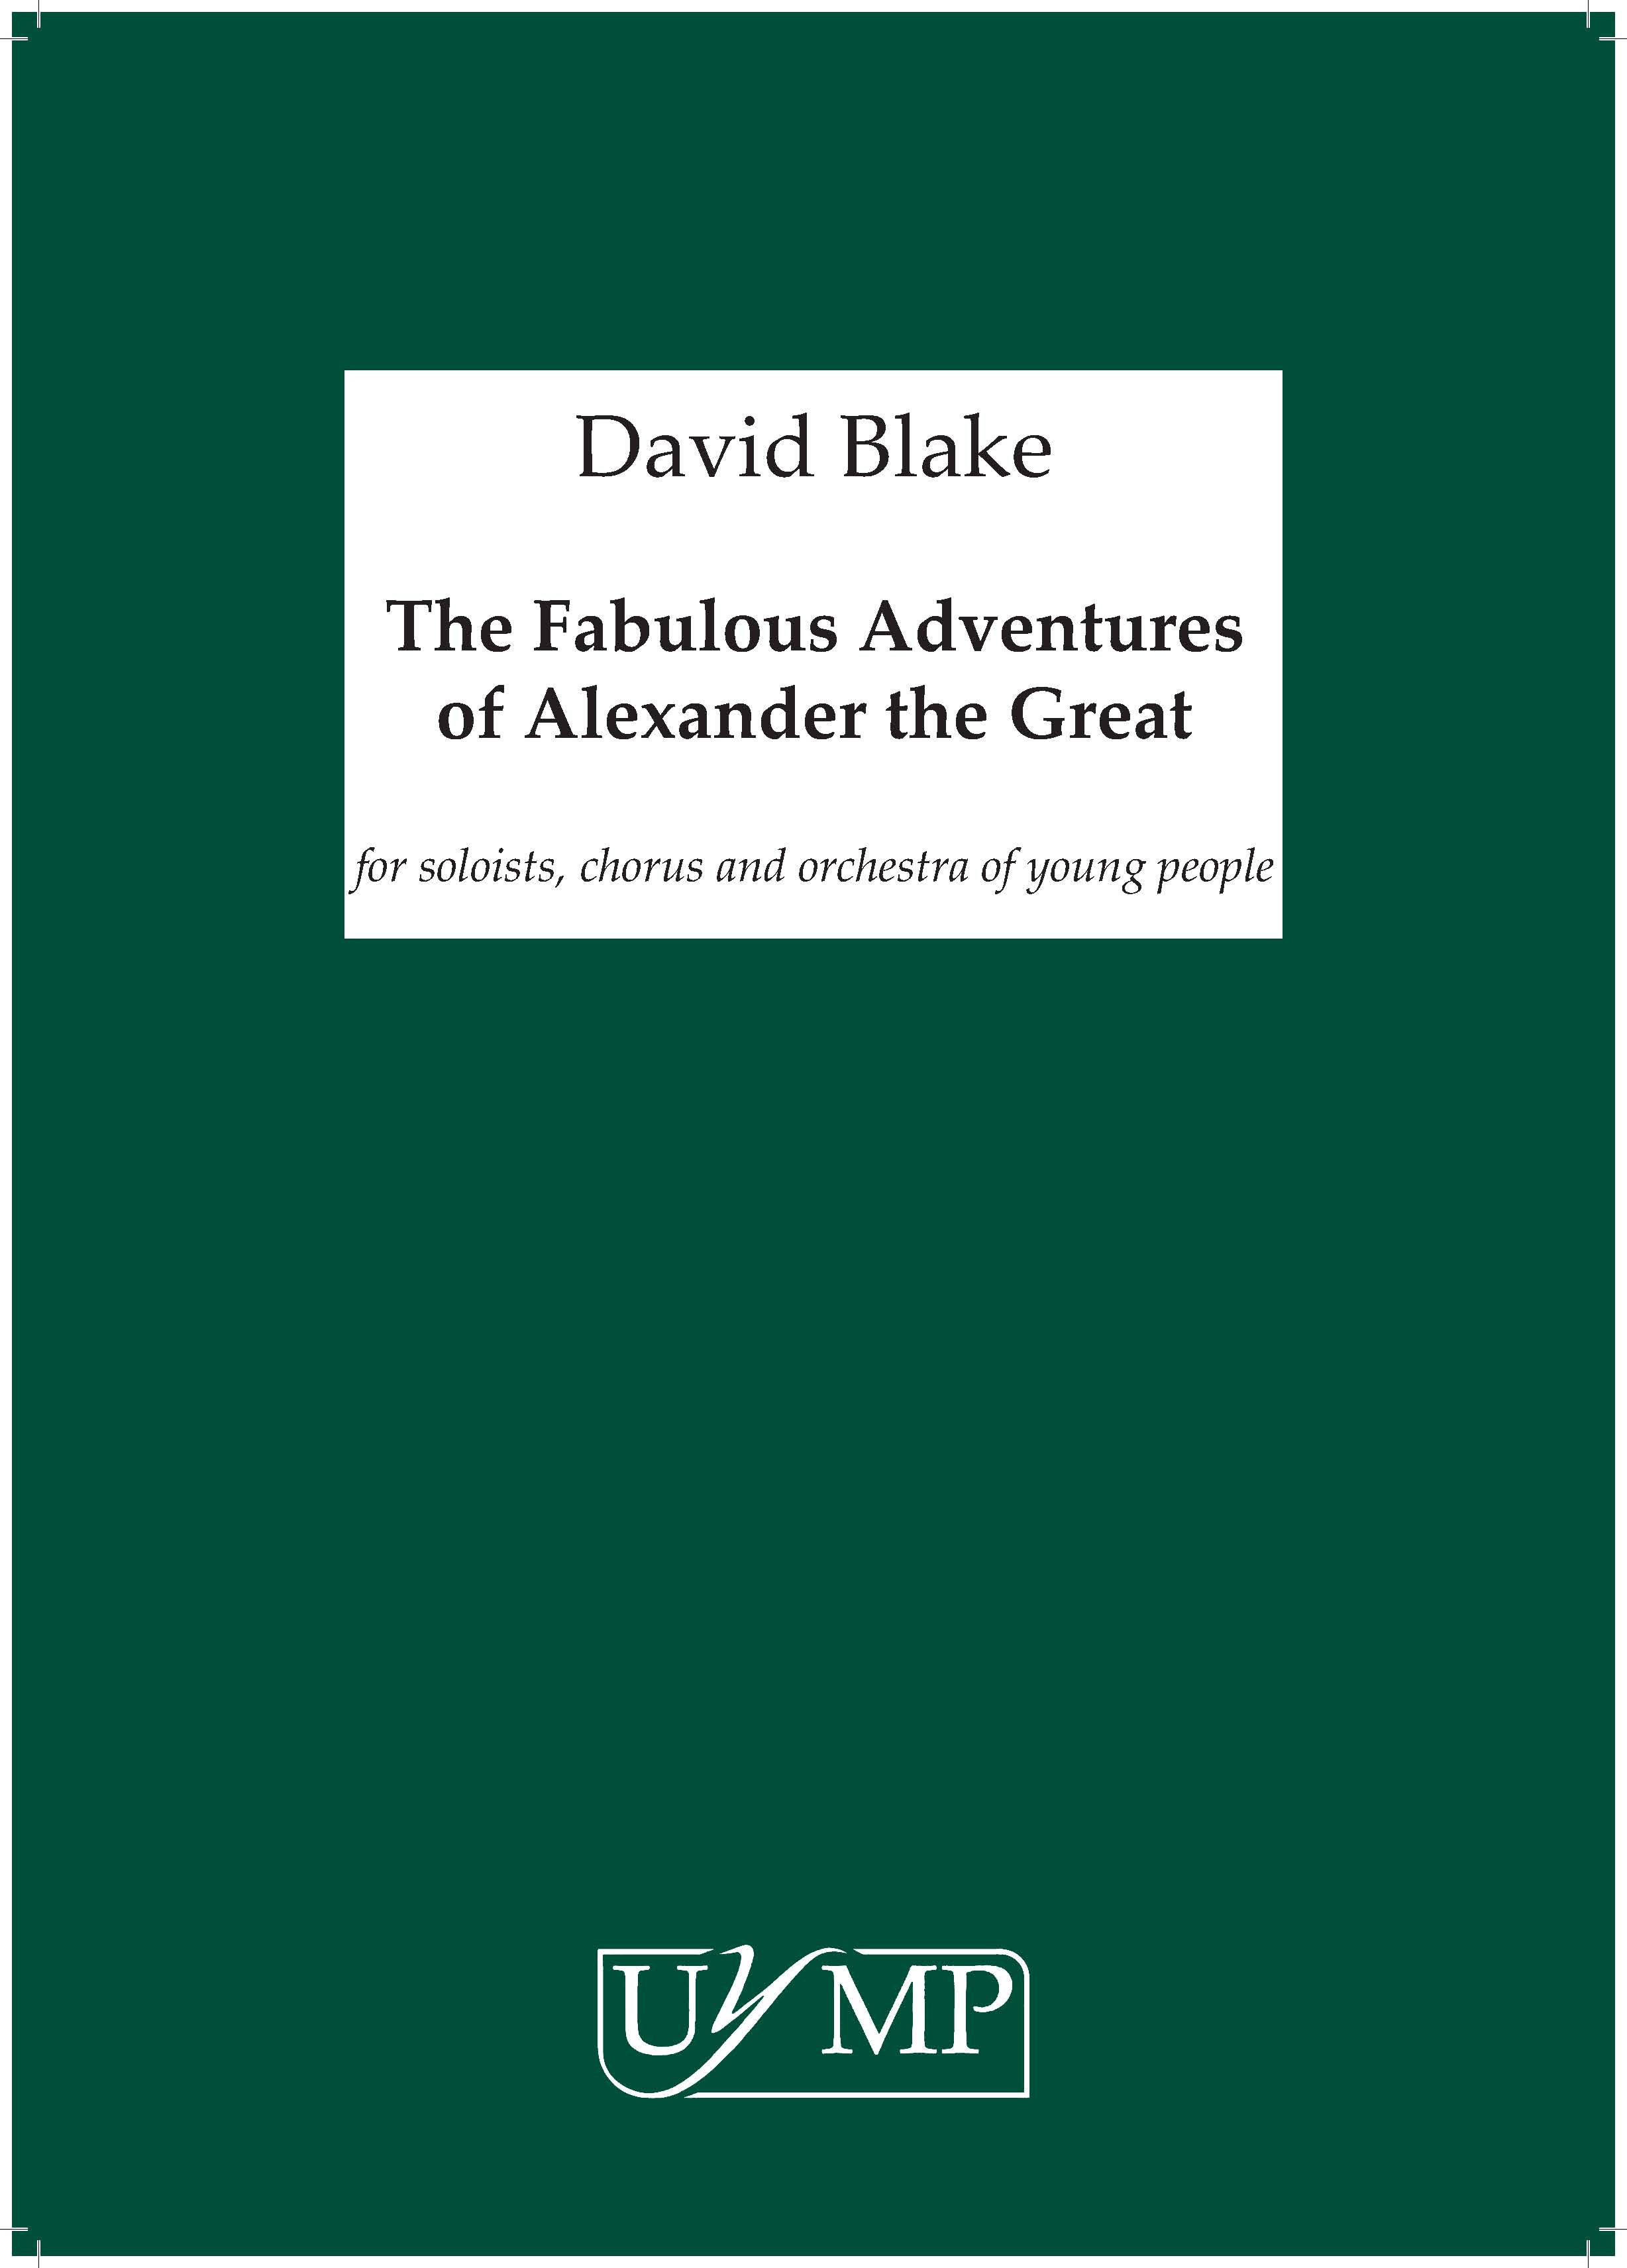 David Blake: The Fabulous Adventures of Alexander the Great